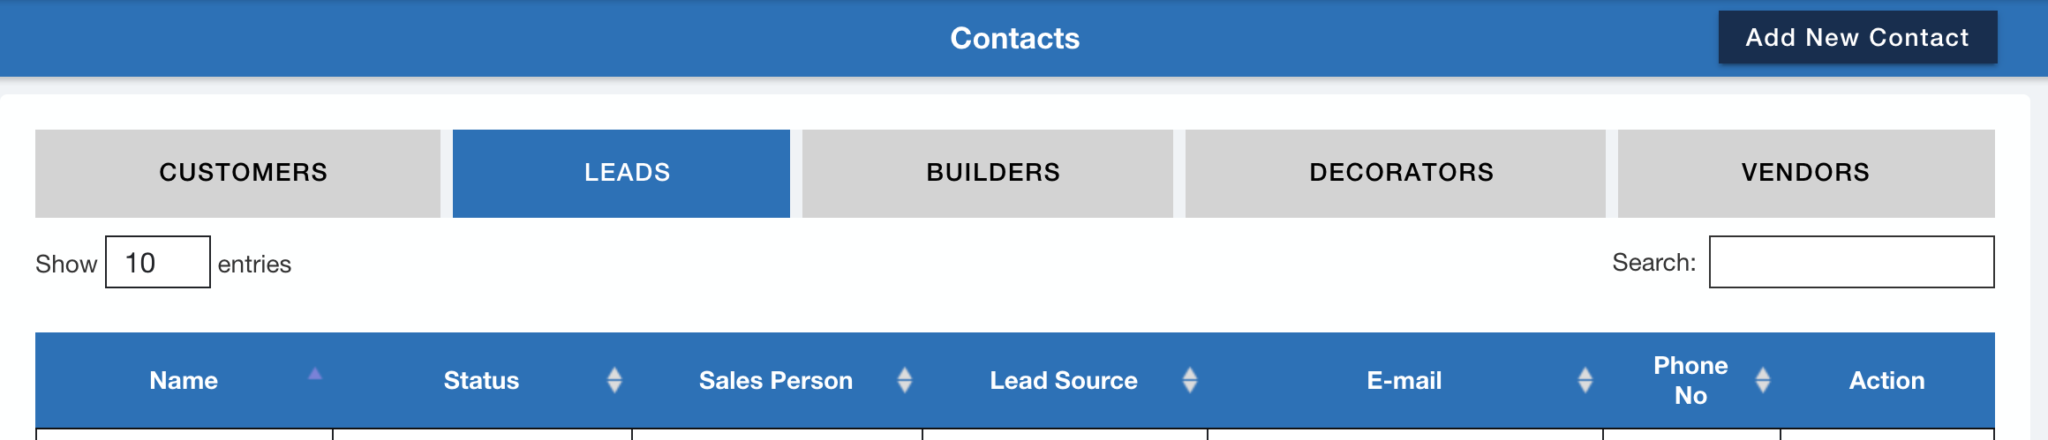 Lead management tab in MyBlindCo portal